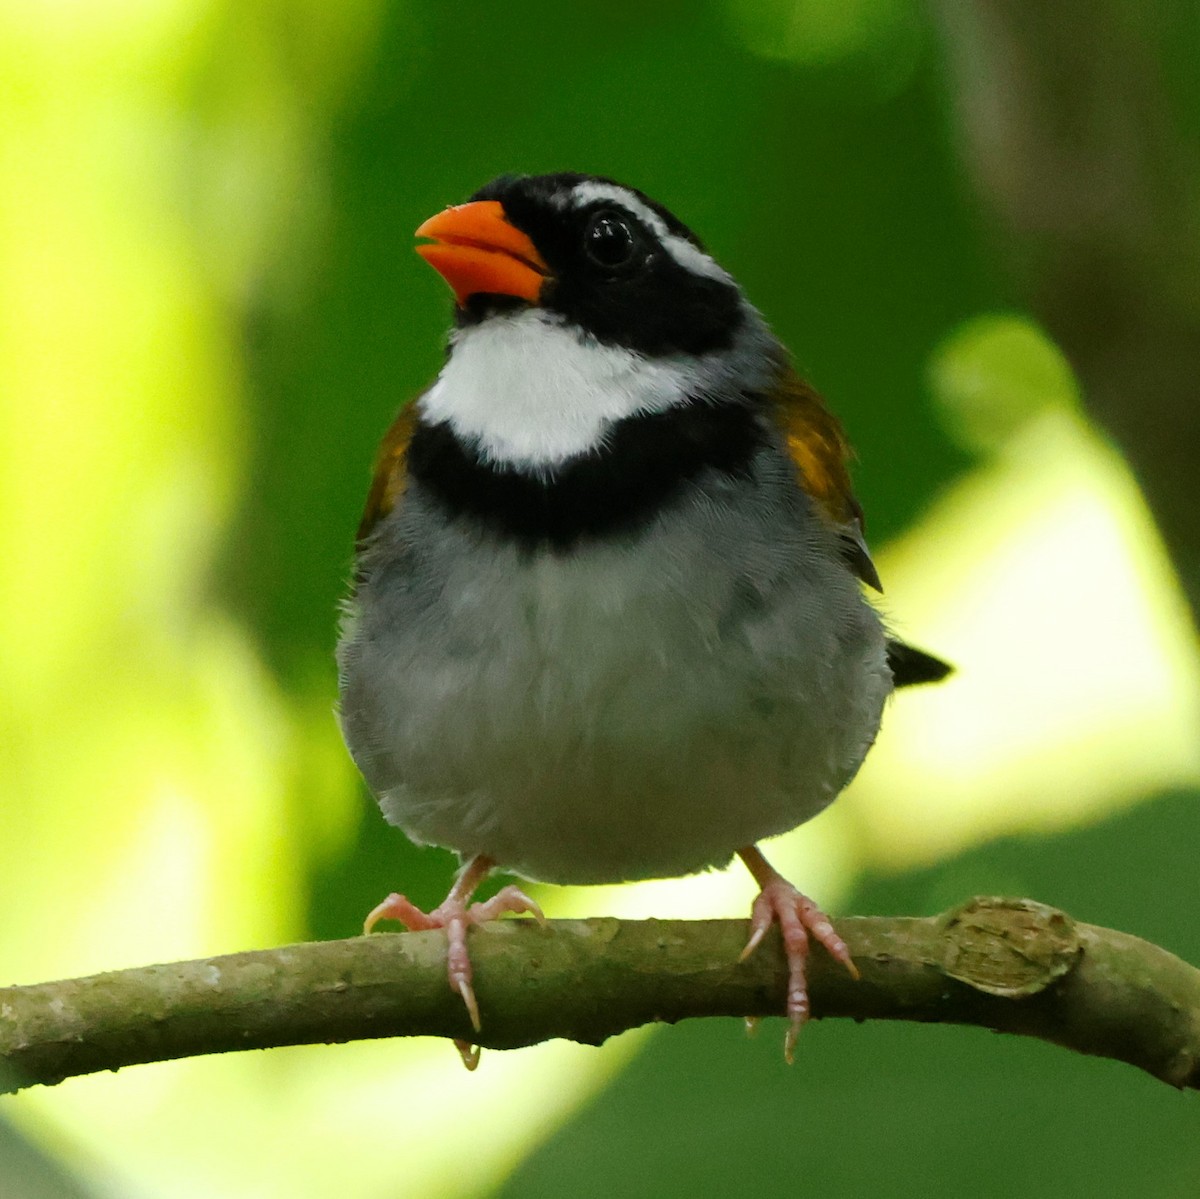 Orange-billed Sparrow (aurantiirostris Group) - John Mills